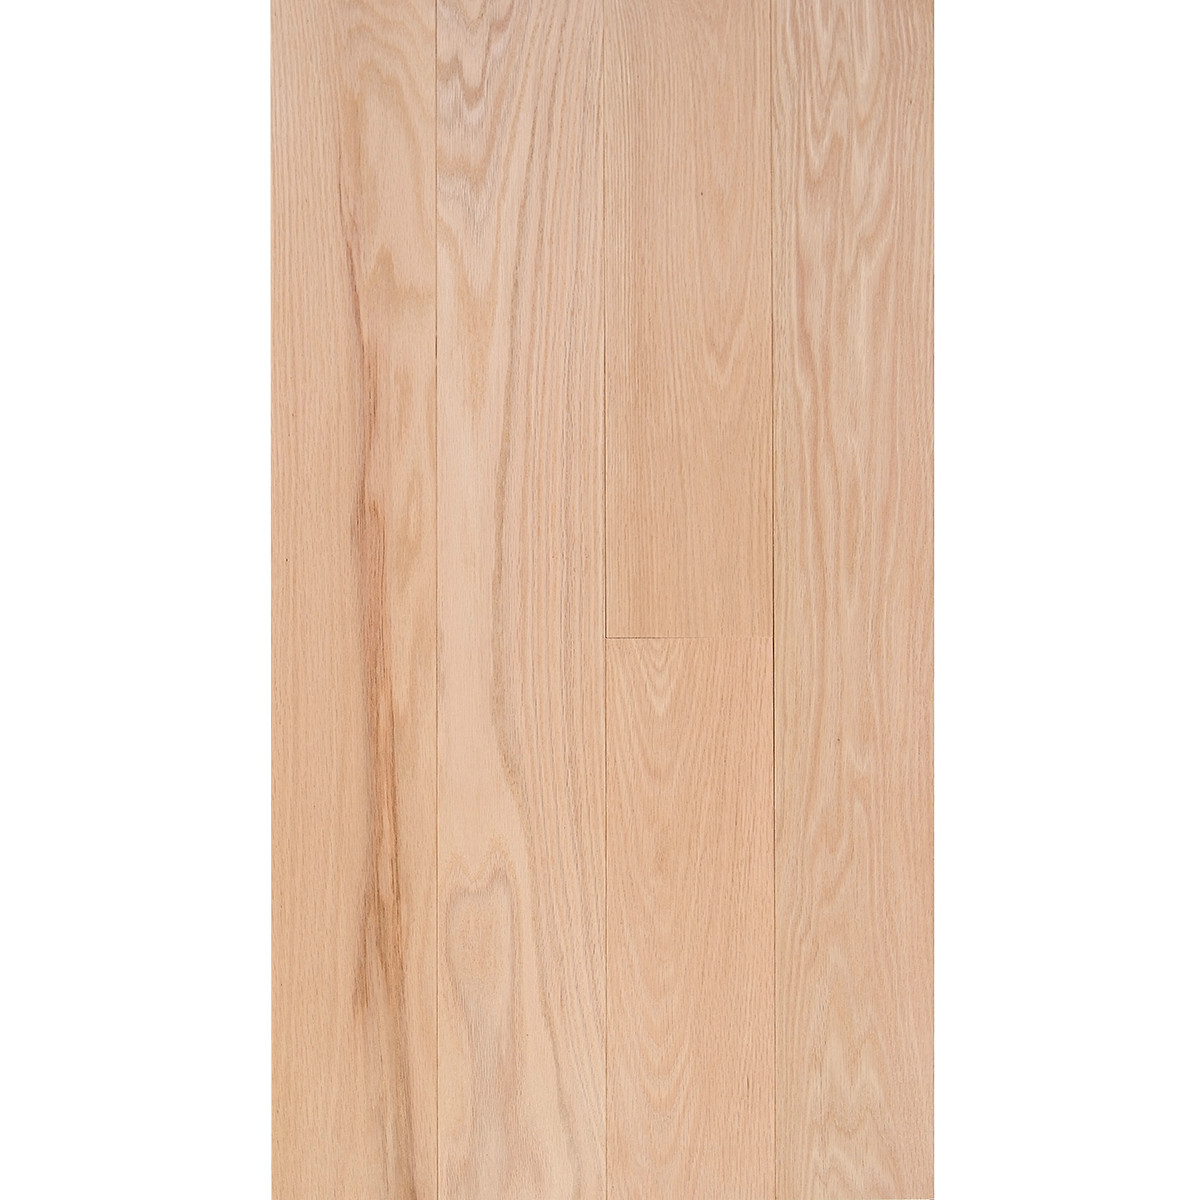 raw hardwood flooring wholesale of red oak 3 4 x 5 select grade flooring inside fs 5 redoak select em flooring